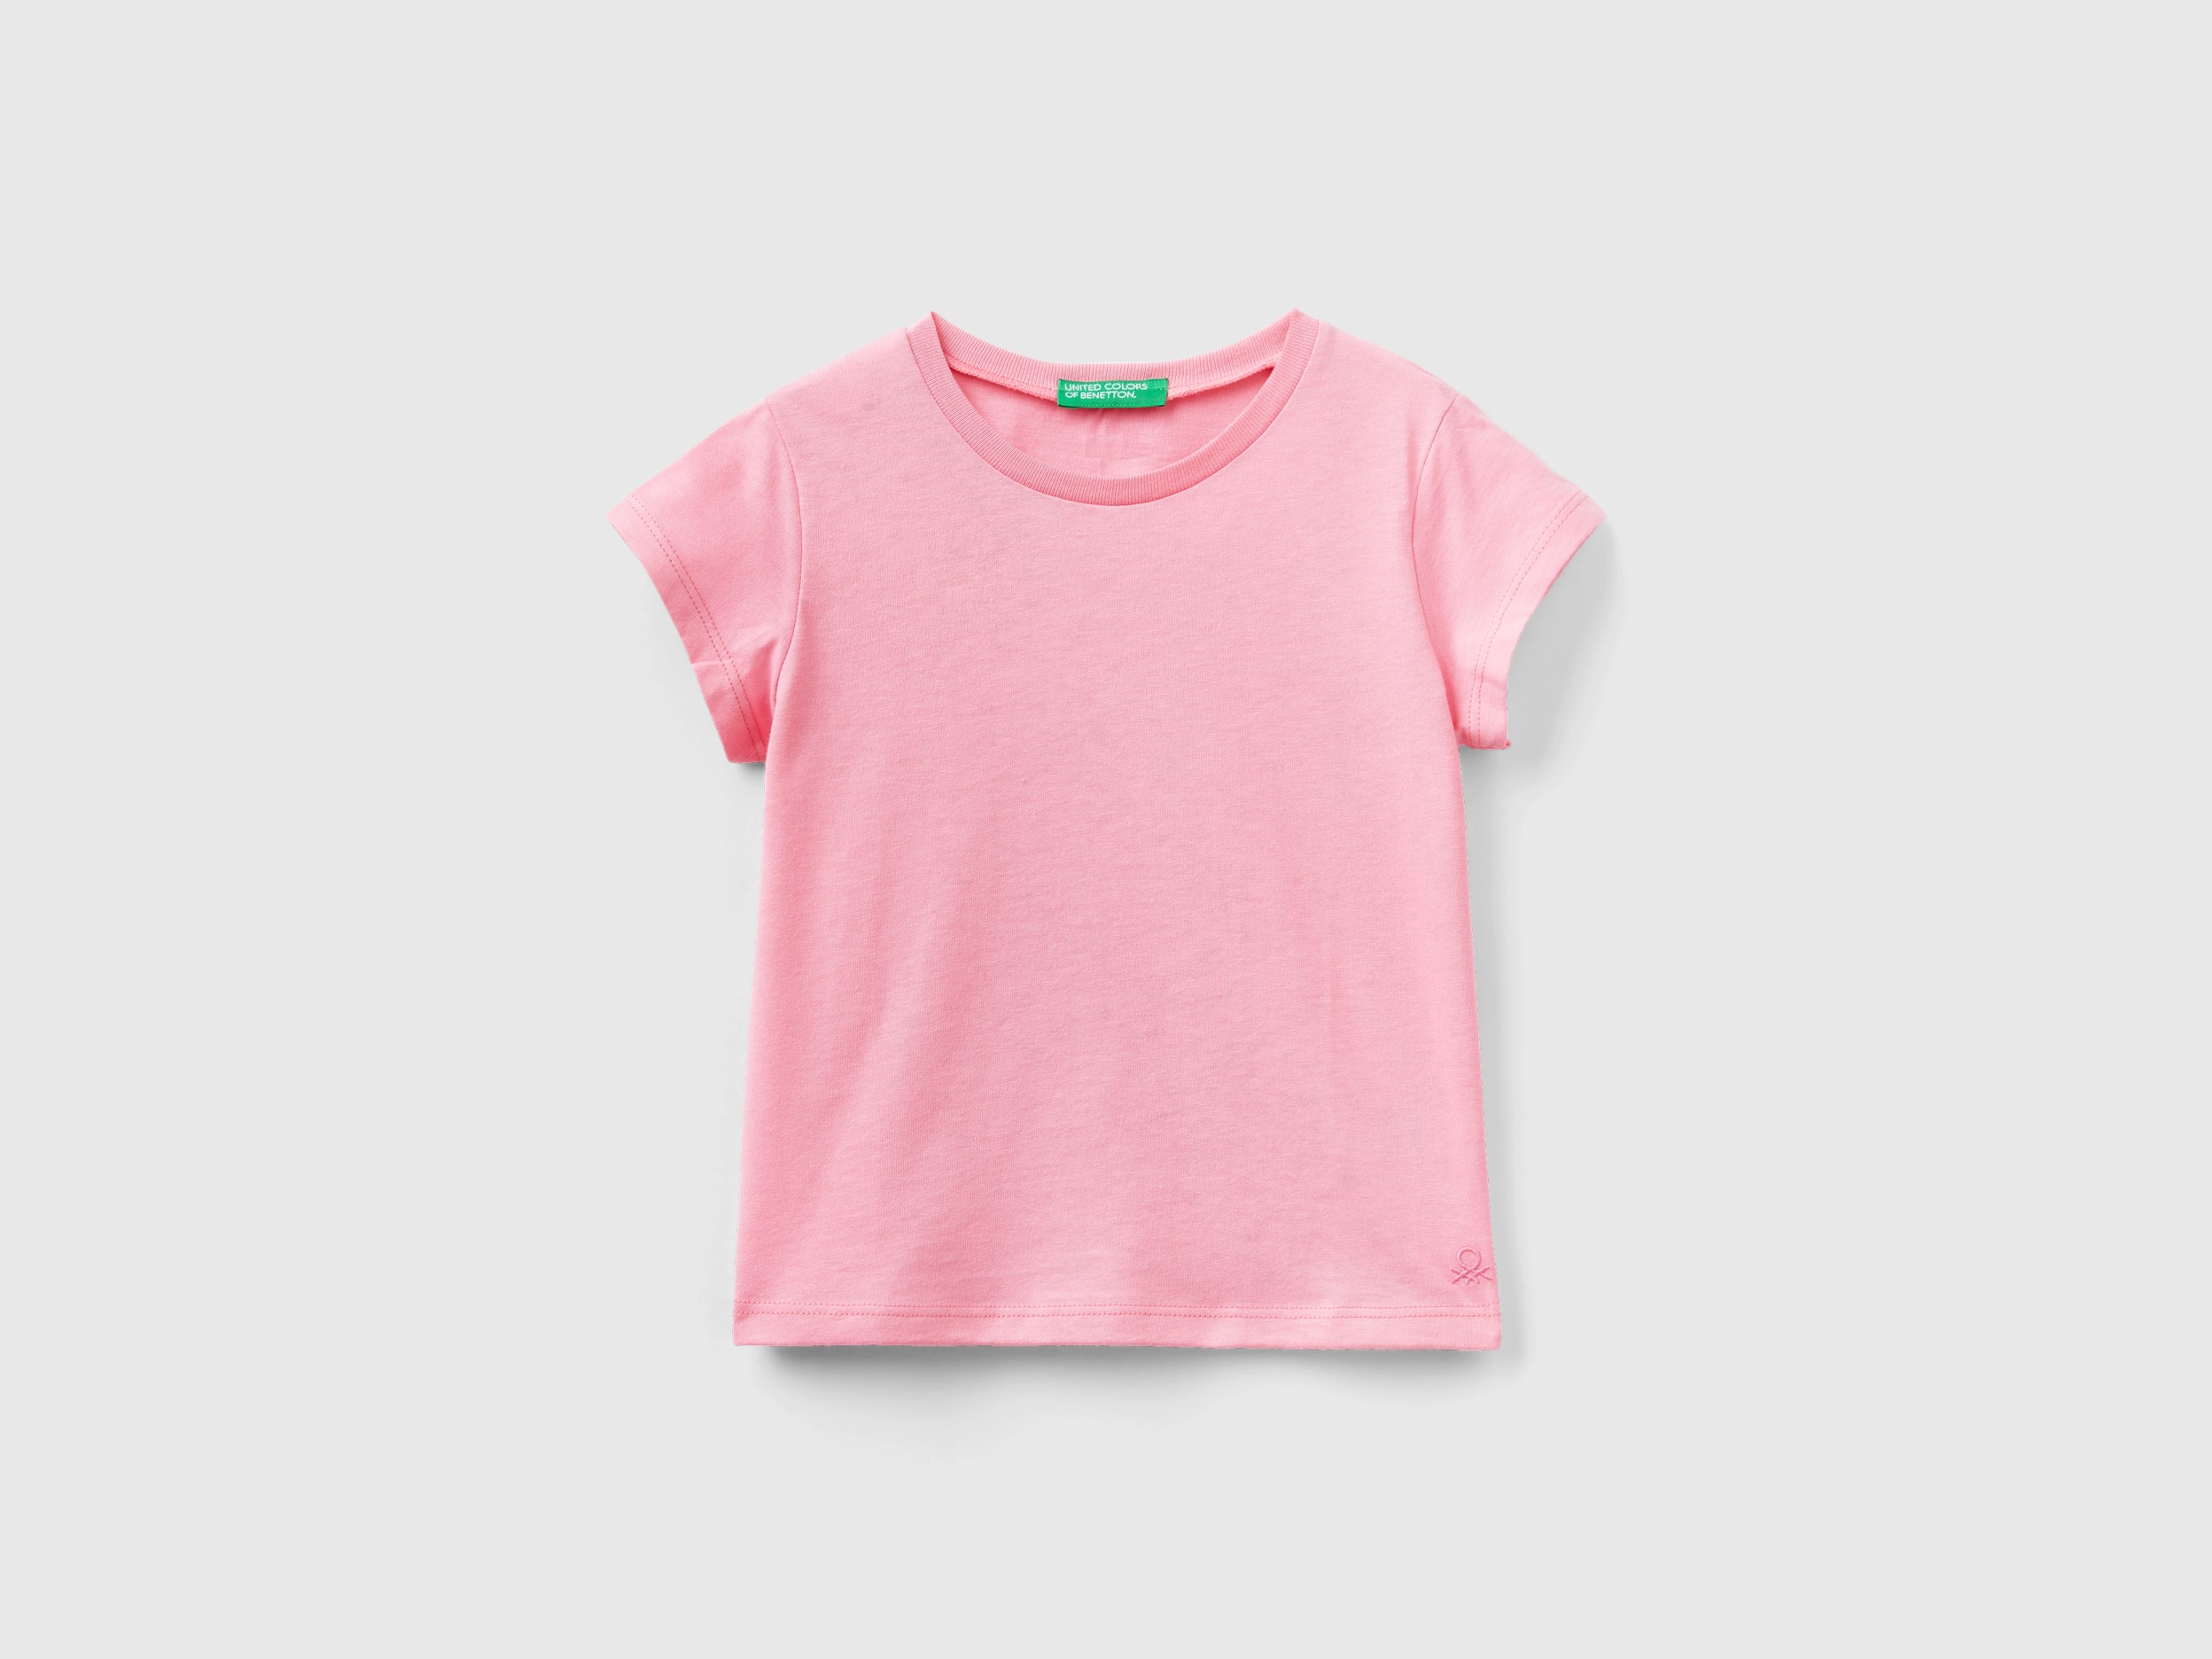 Image of Benetton, 100% Organic Cotton T-shirt, size 82, Pink, Kids